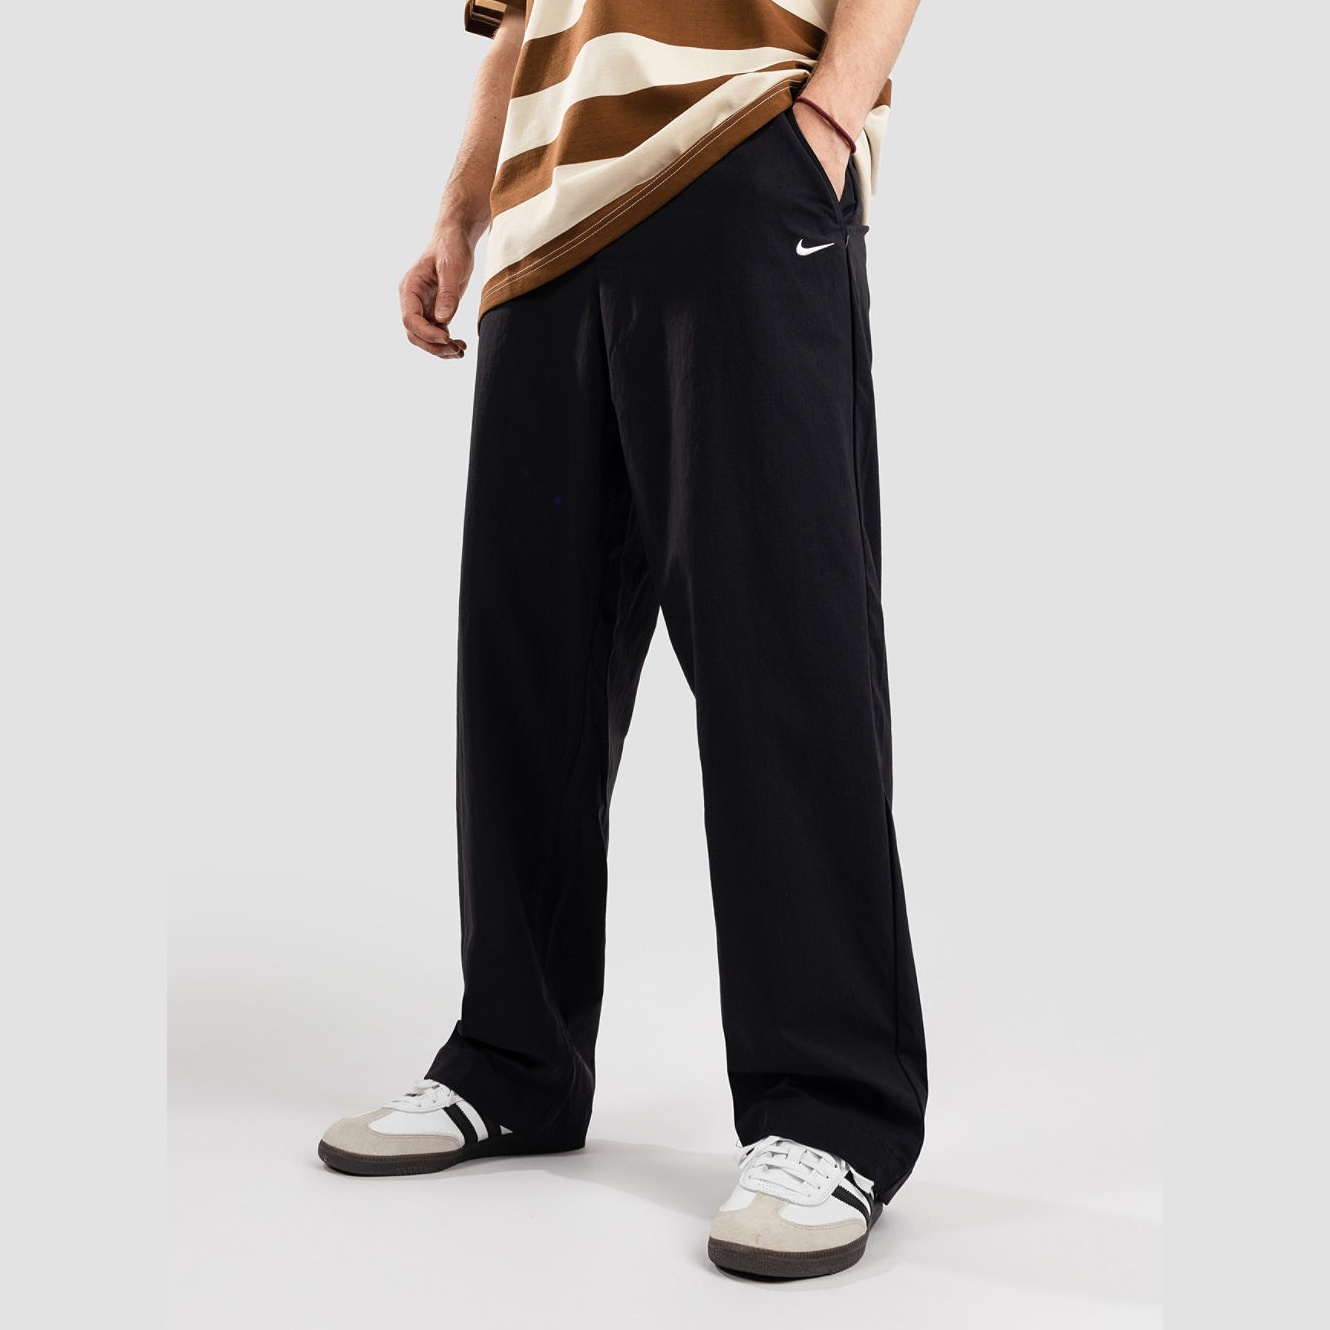 Nike Sb Black Pantalon chino Homme